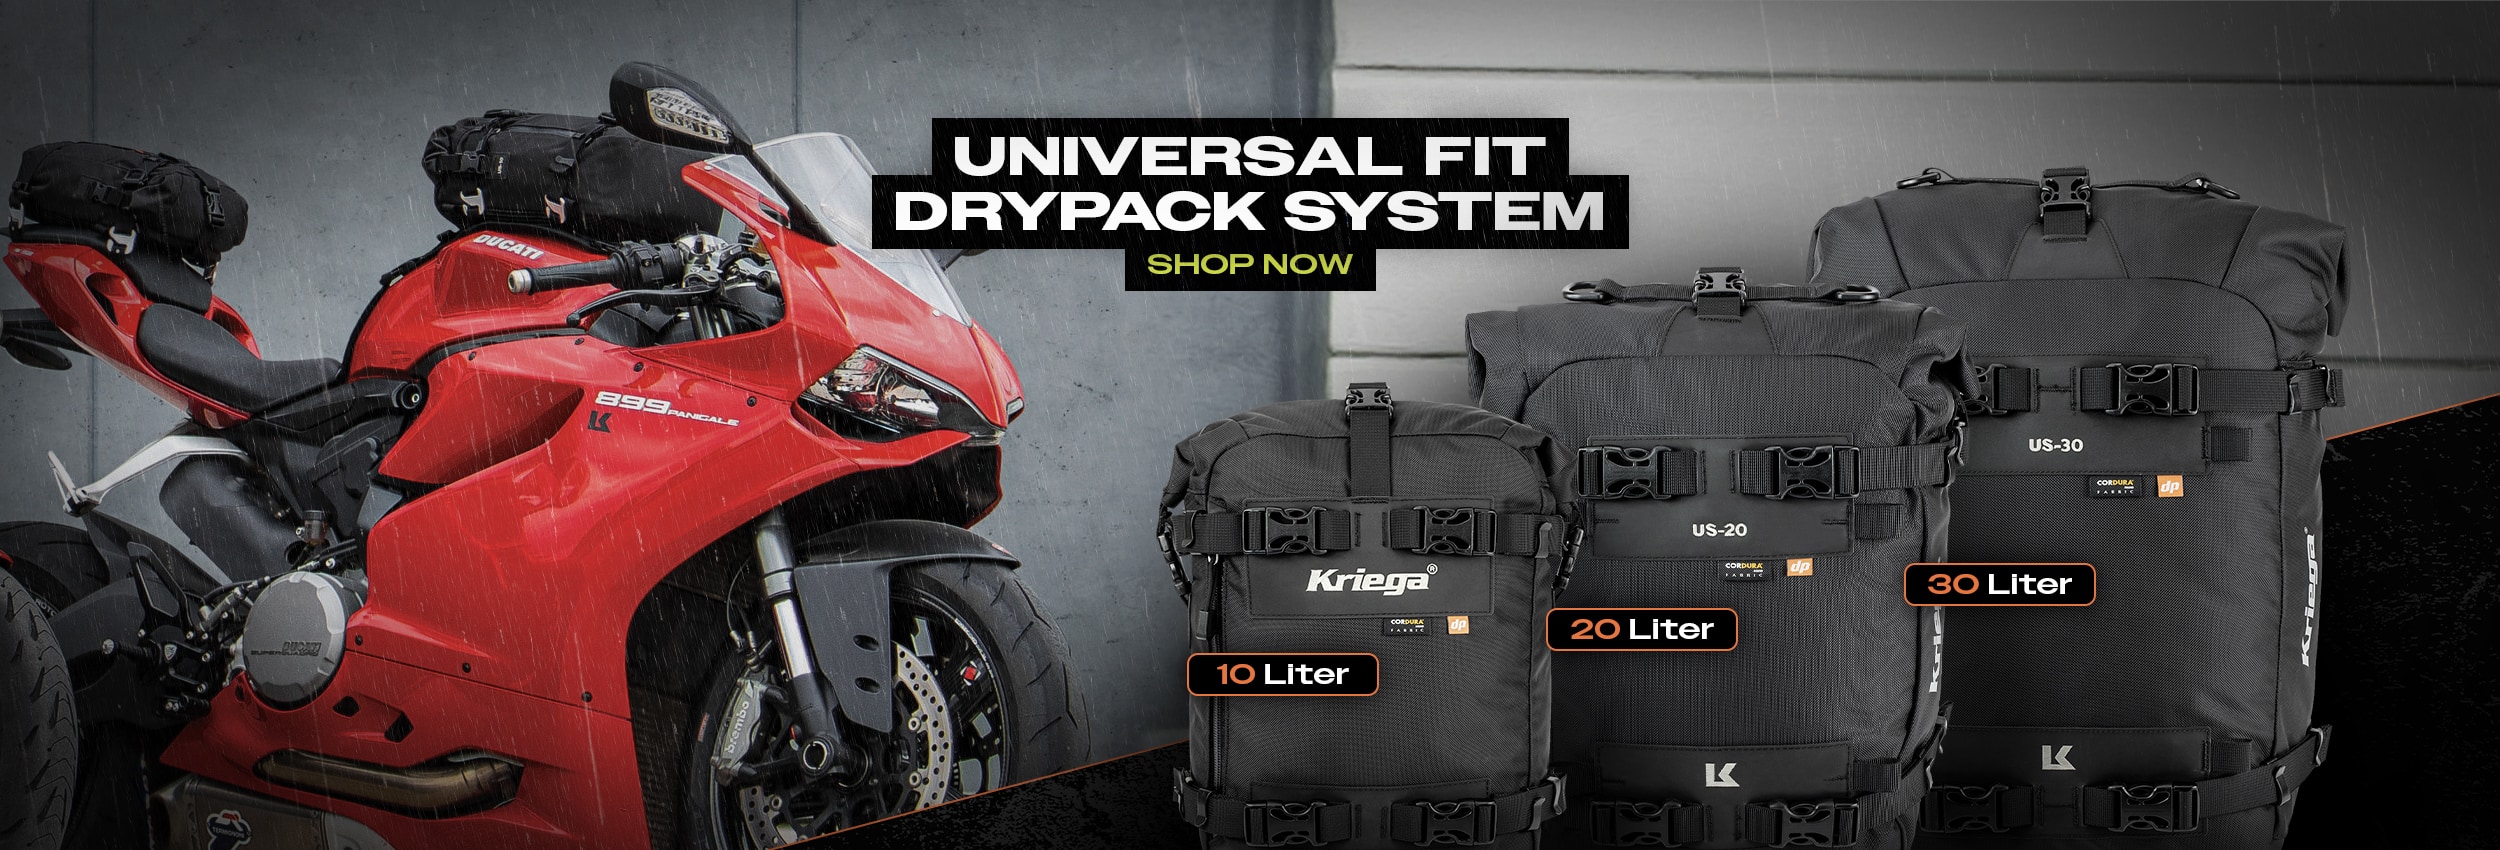 Kriega universal fit drypack system